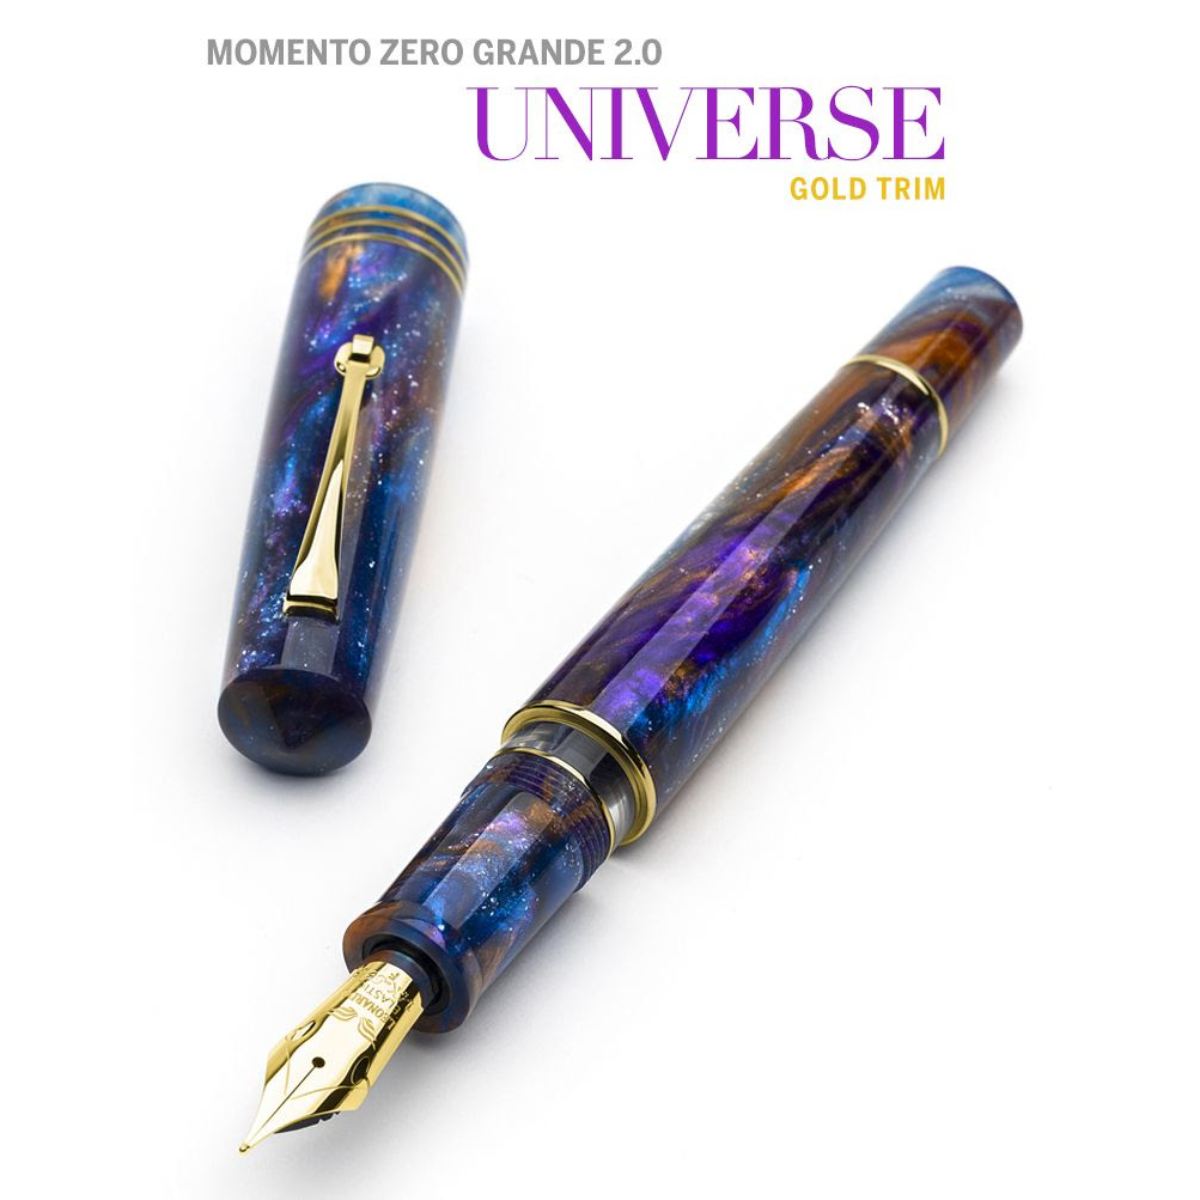 Leonardo Momento Zero Grande 2.0 Fountain Pen - Universe - Gold Trim (Limited Edition) Leonardo